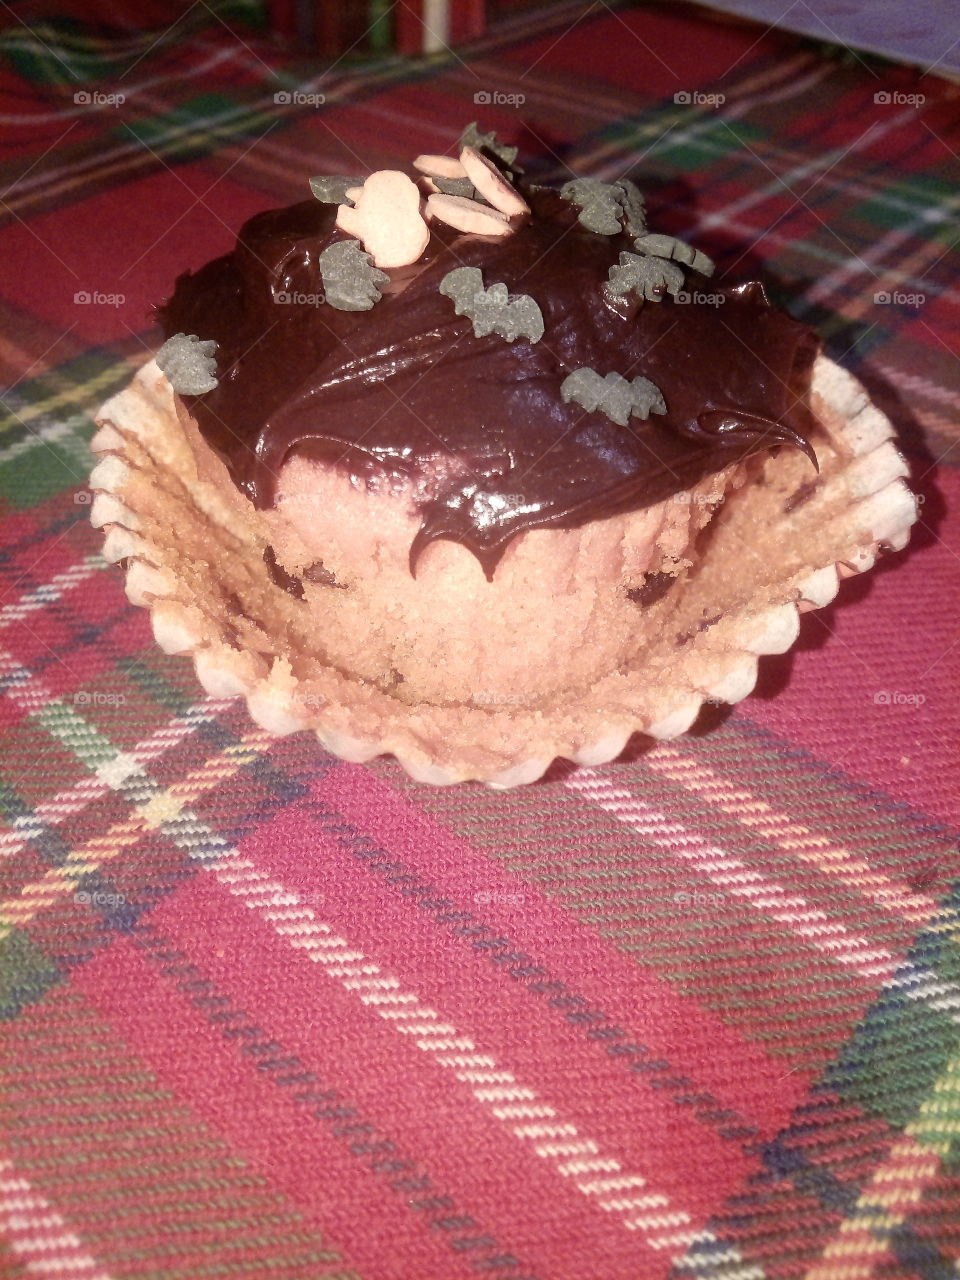 cupcake my daughter made